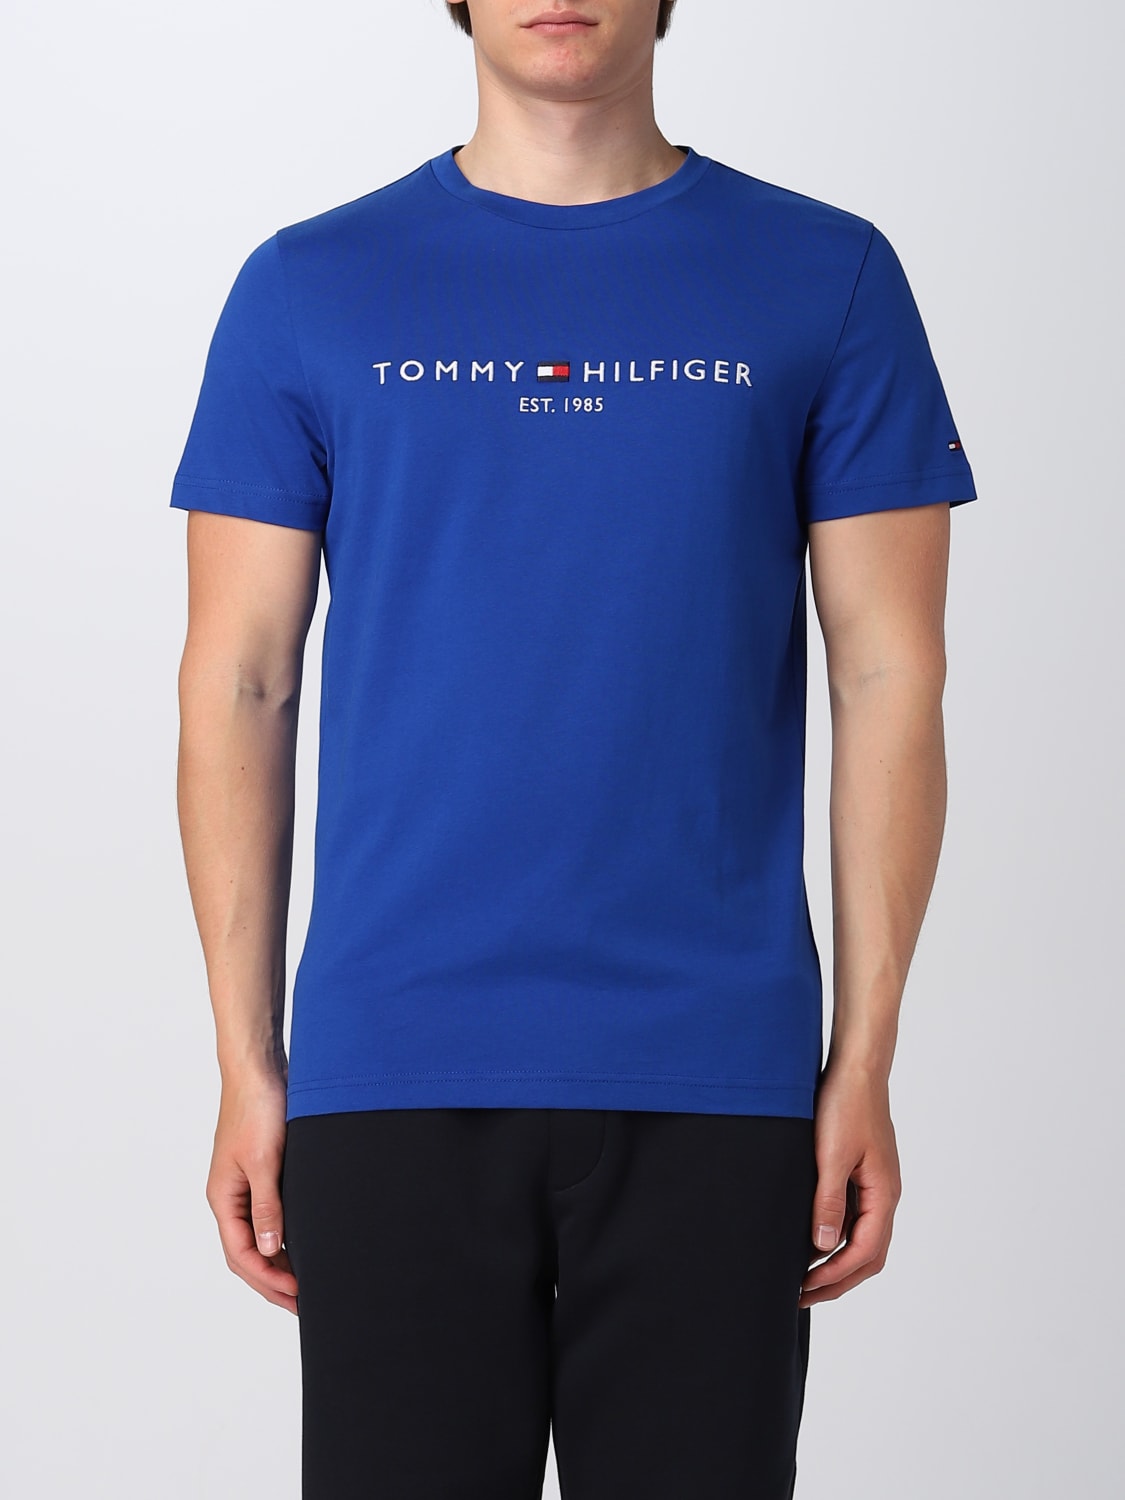 TOMMY HILFIGER: cotton t-shirt - Royal Blue | Tommy Hilfiger t-shirt  MW0MW11797 online at